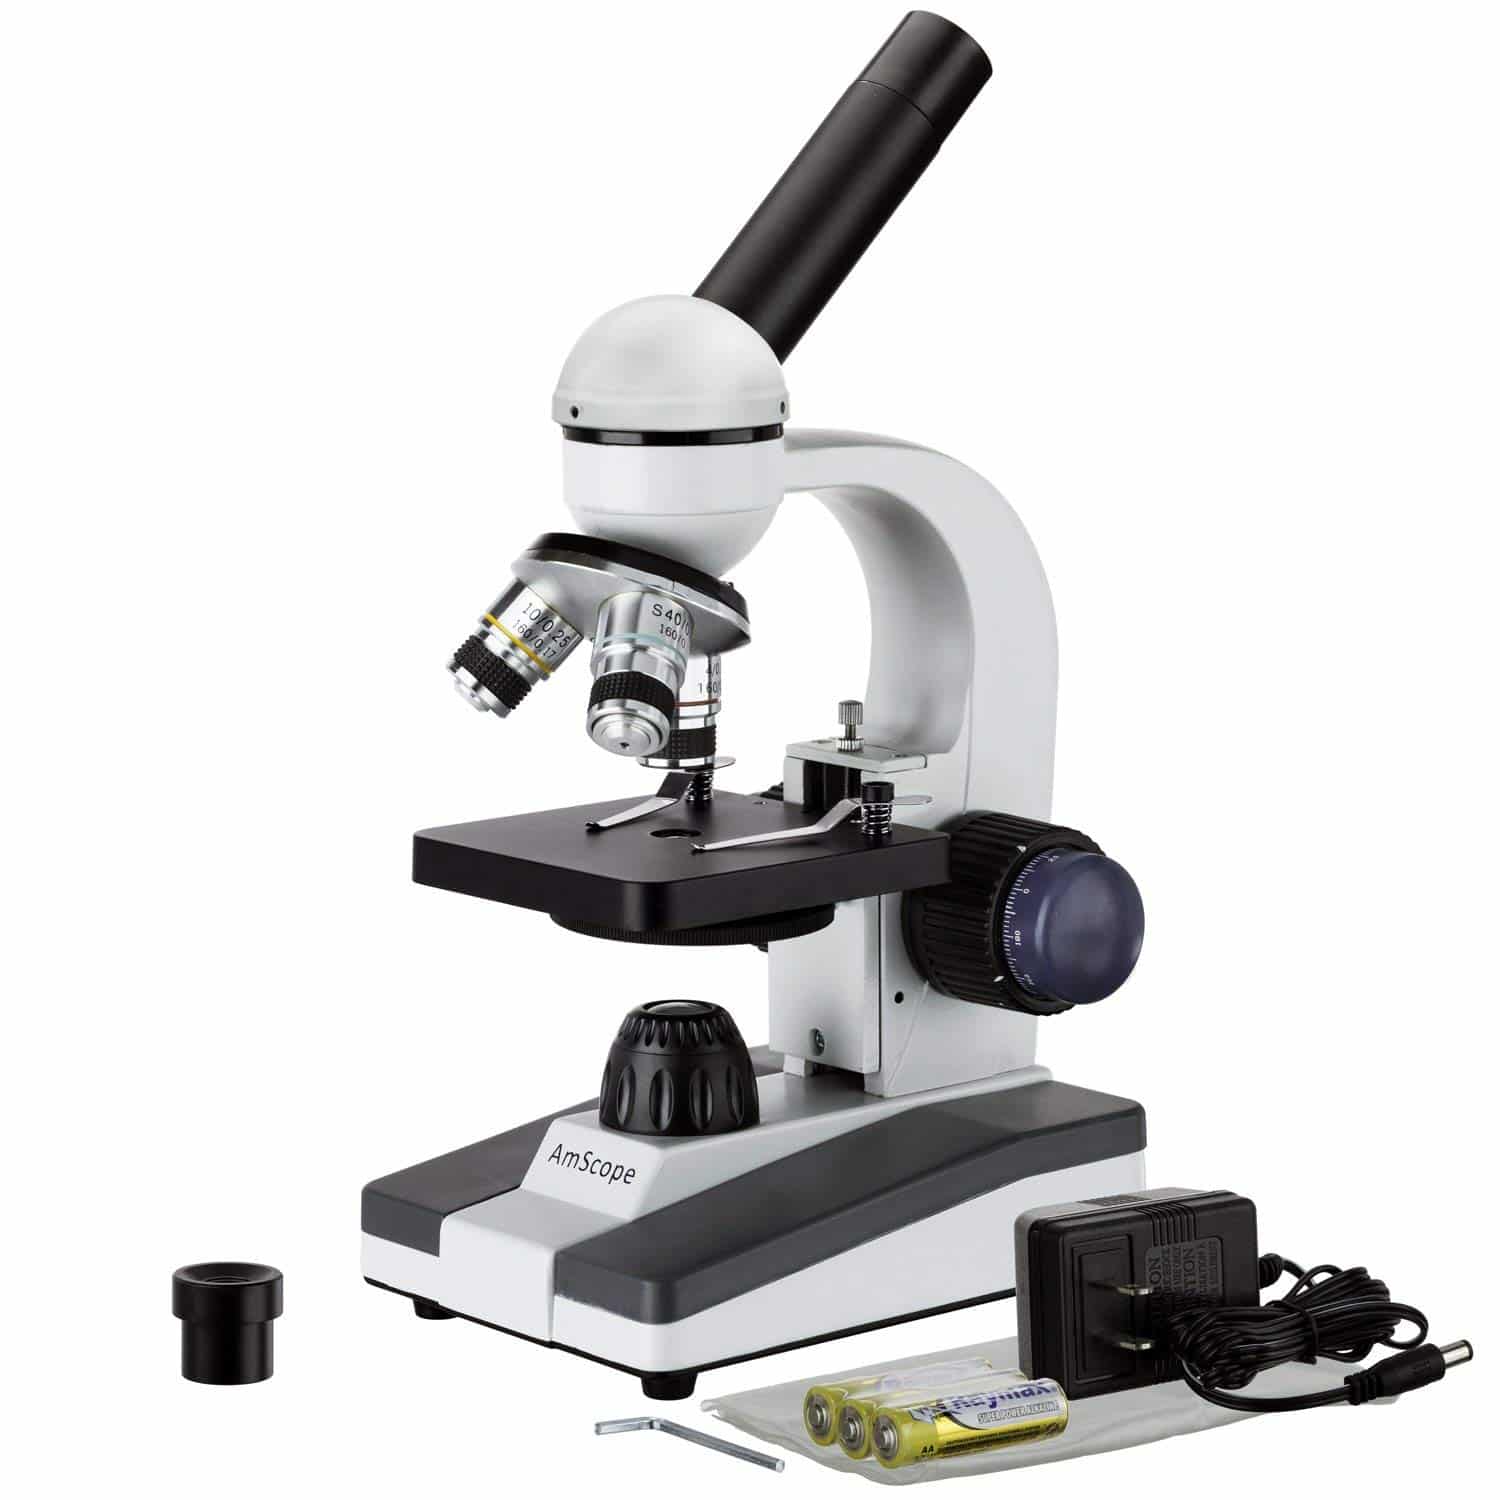 DEAL ALERT: AmScope Compound Microscope 25% off!